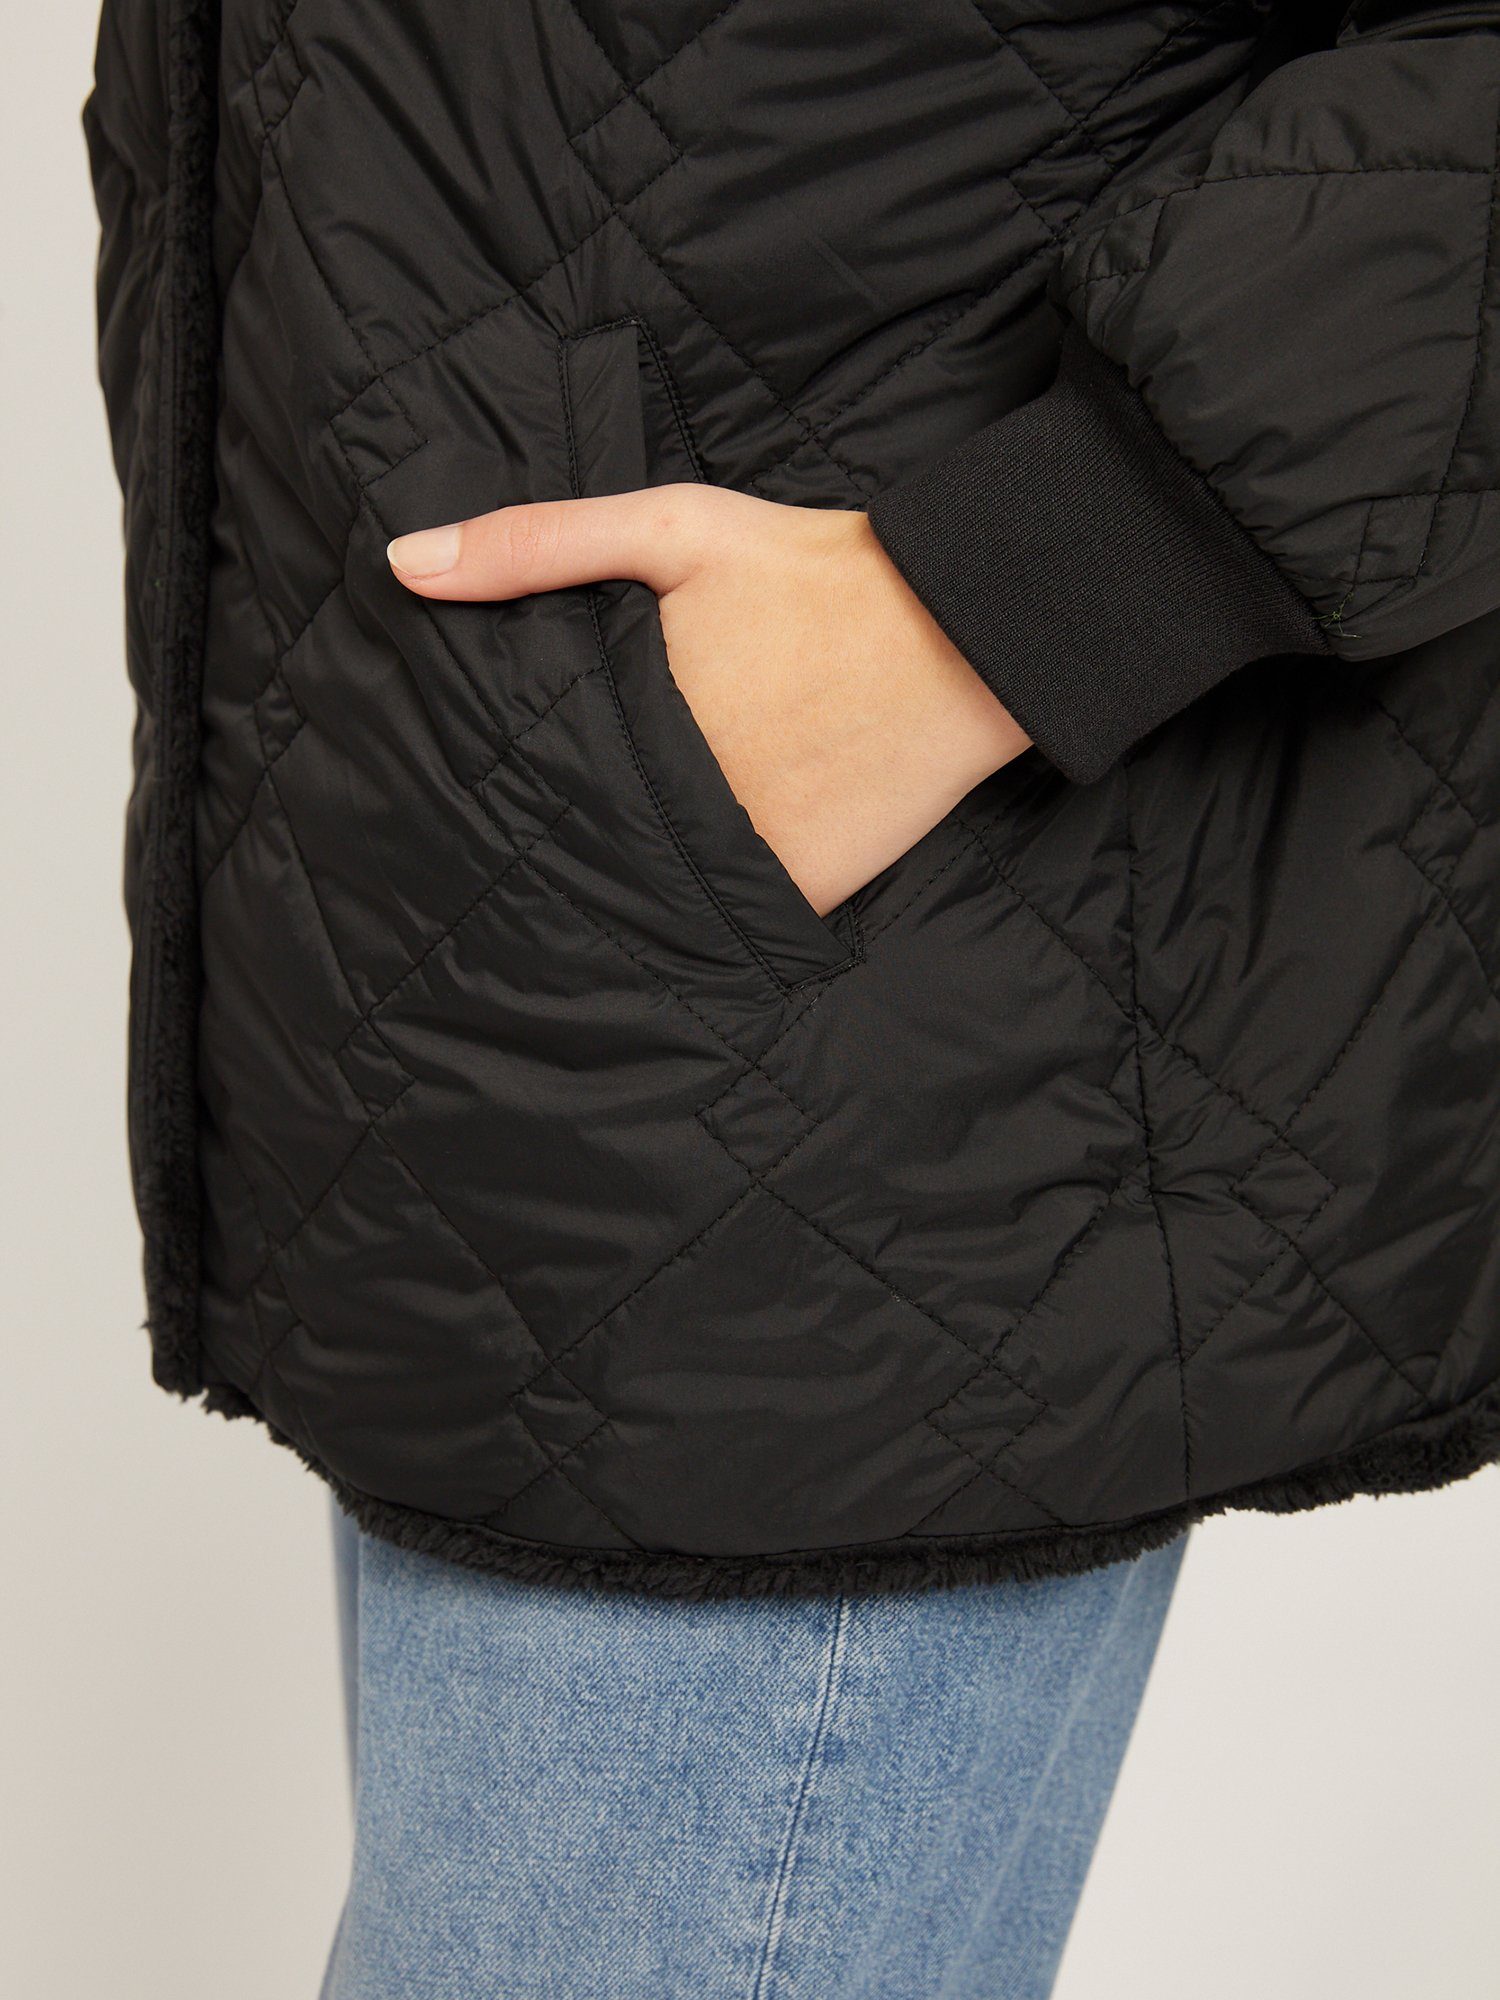 MAZINE Winterjacke Clay black Light gefüttert Jacket warm Down